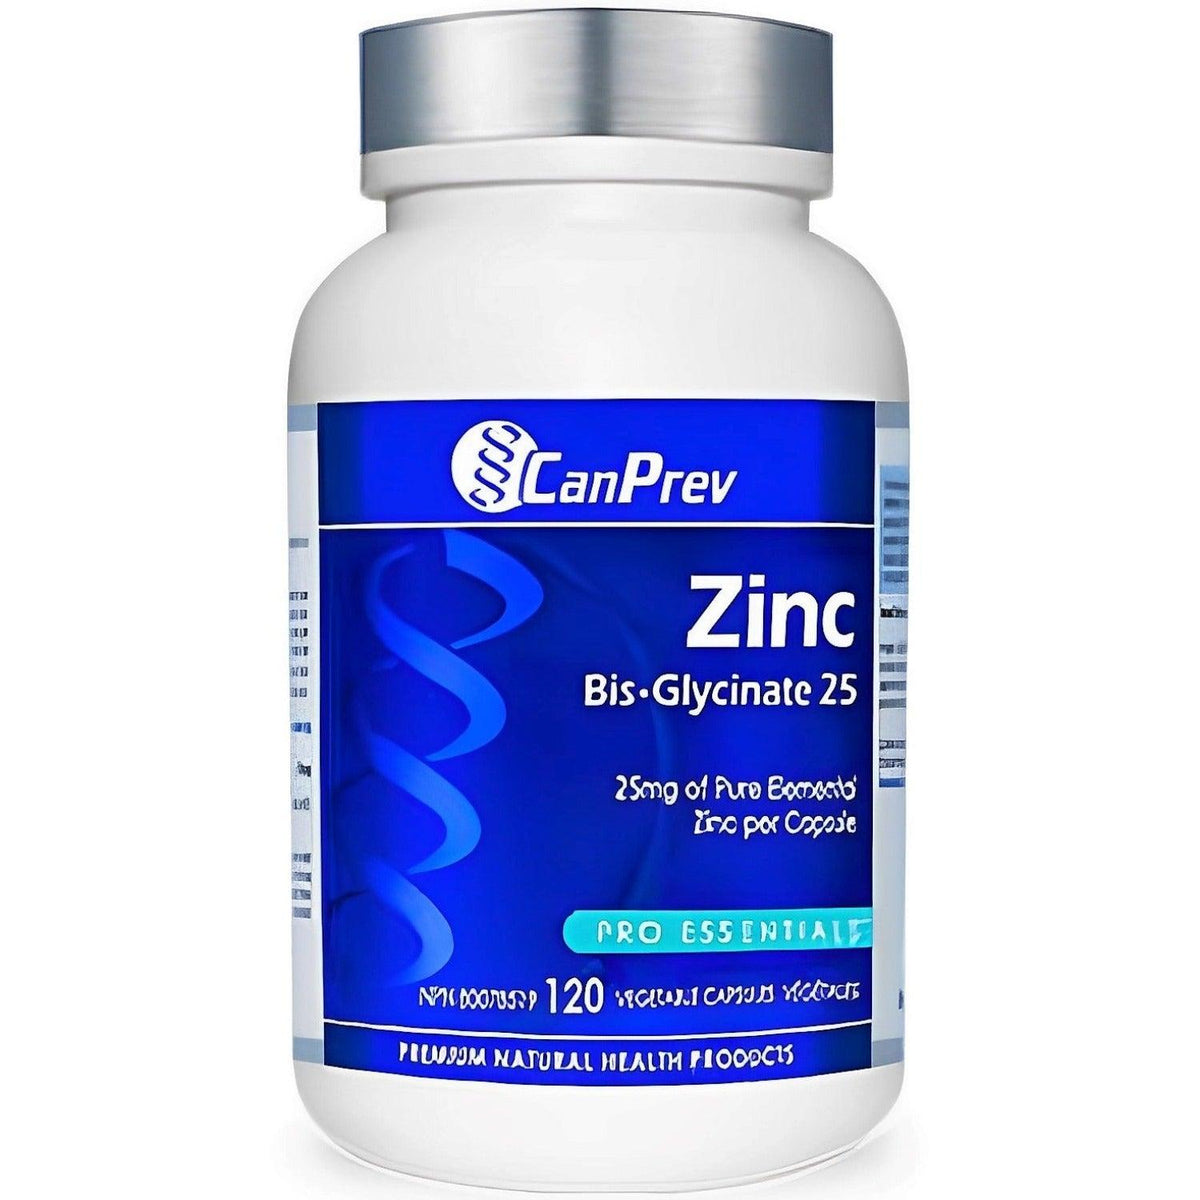 CanPrev Zinc Bis-Glycinate 25 120 Veggie Caps Minerals - Zinc at Village Vitamin Store